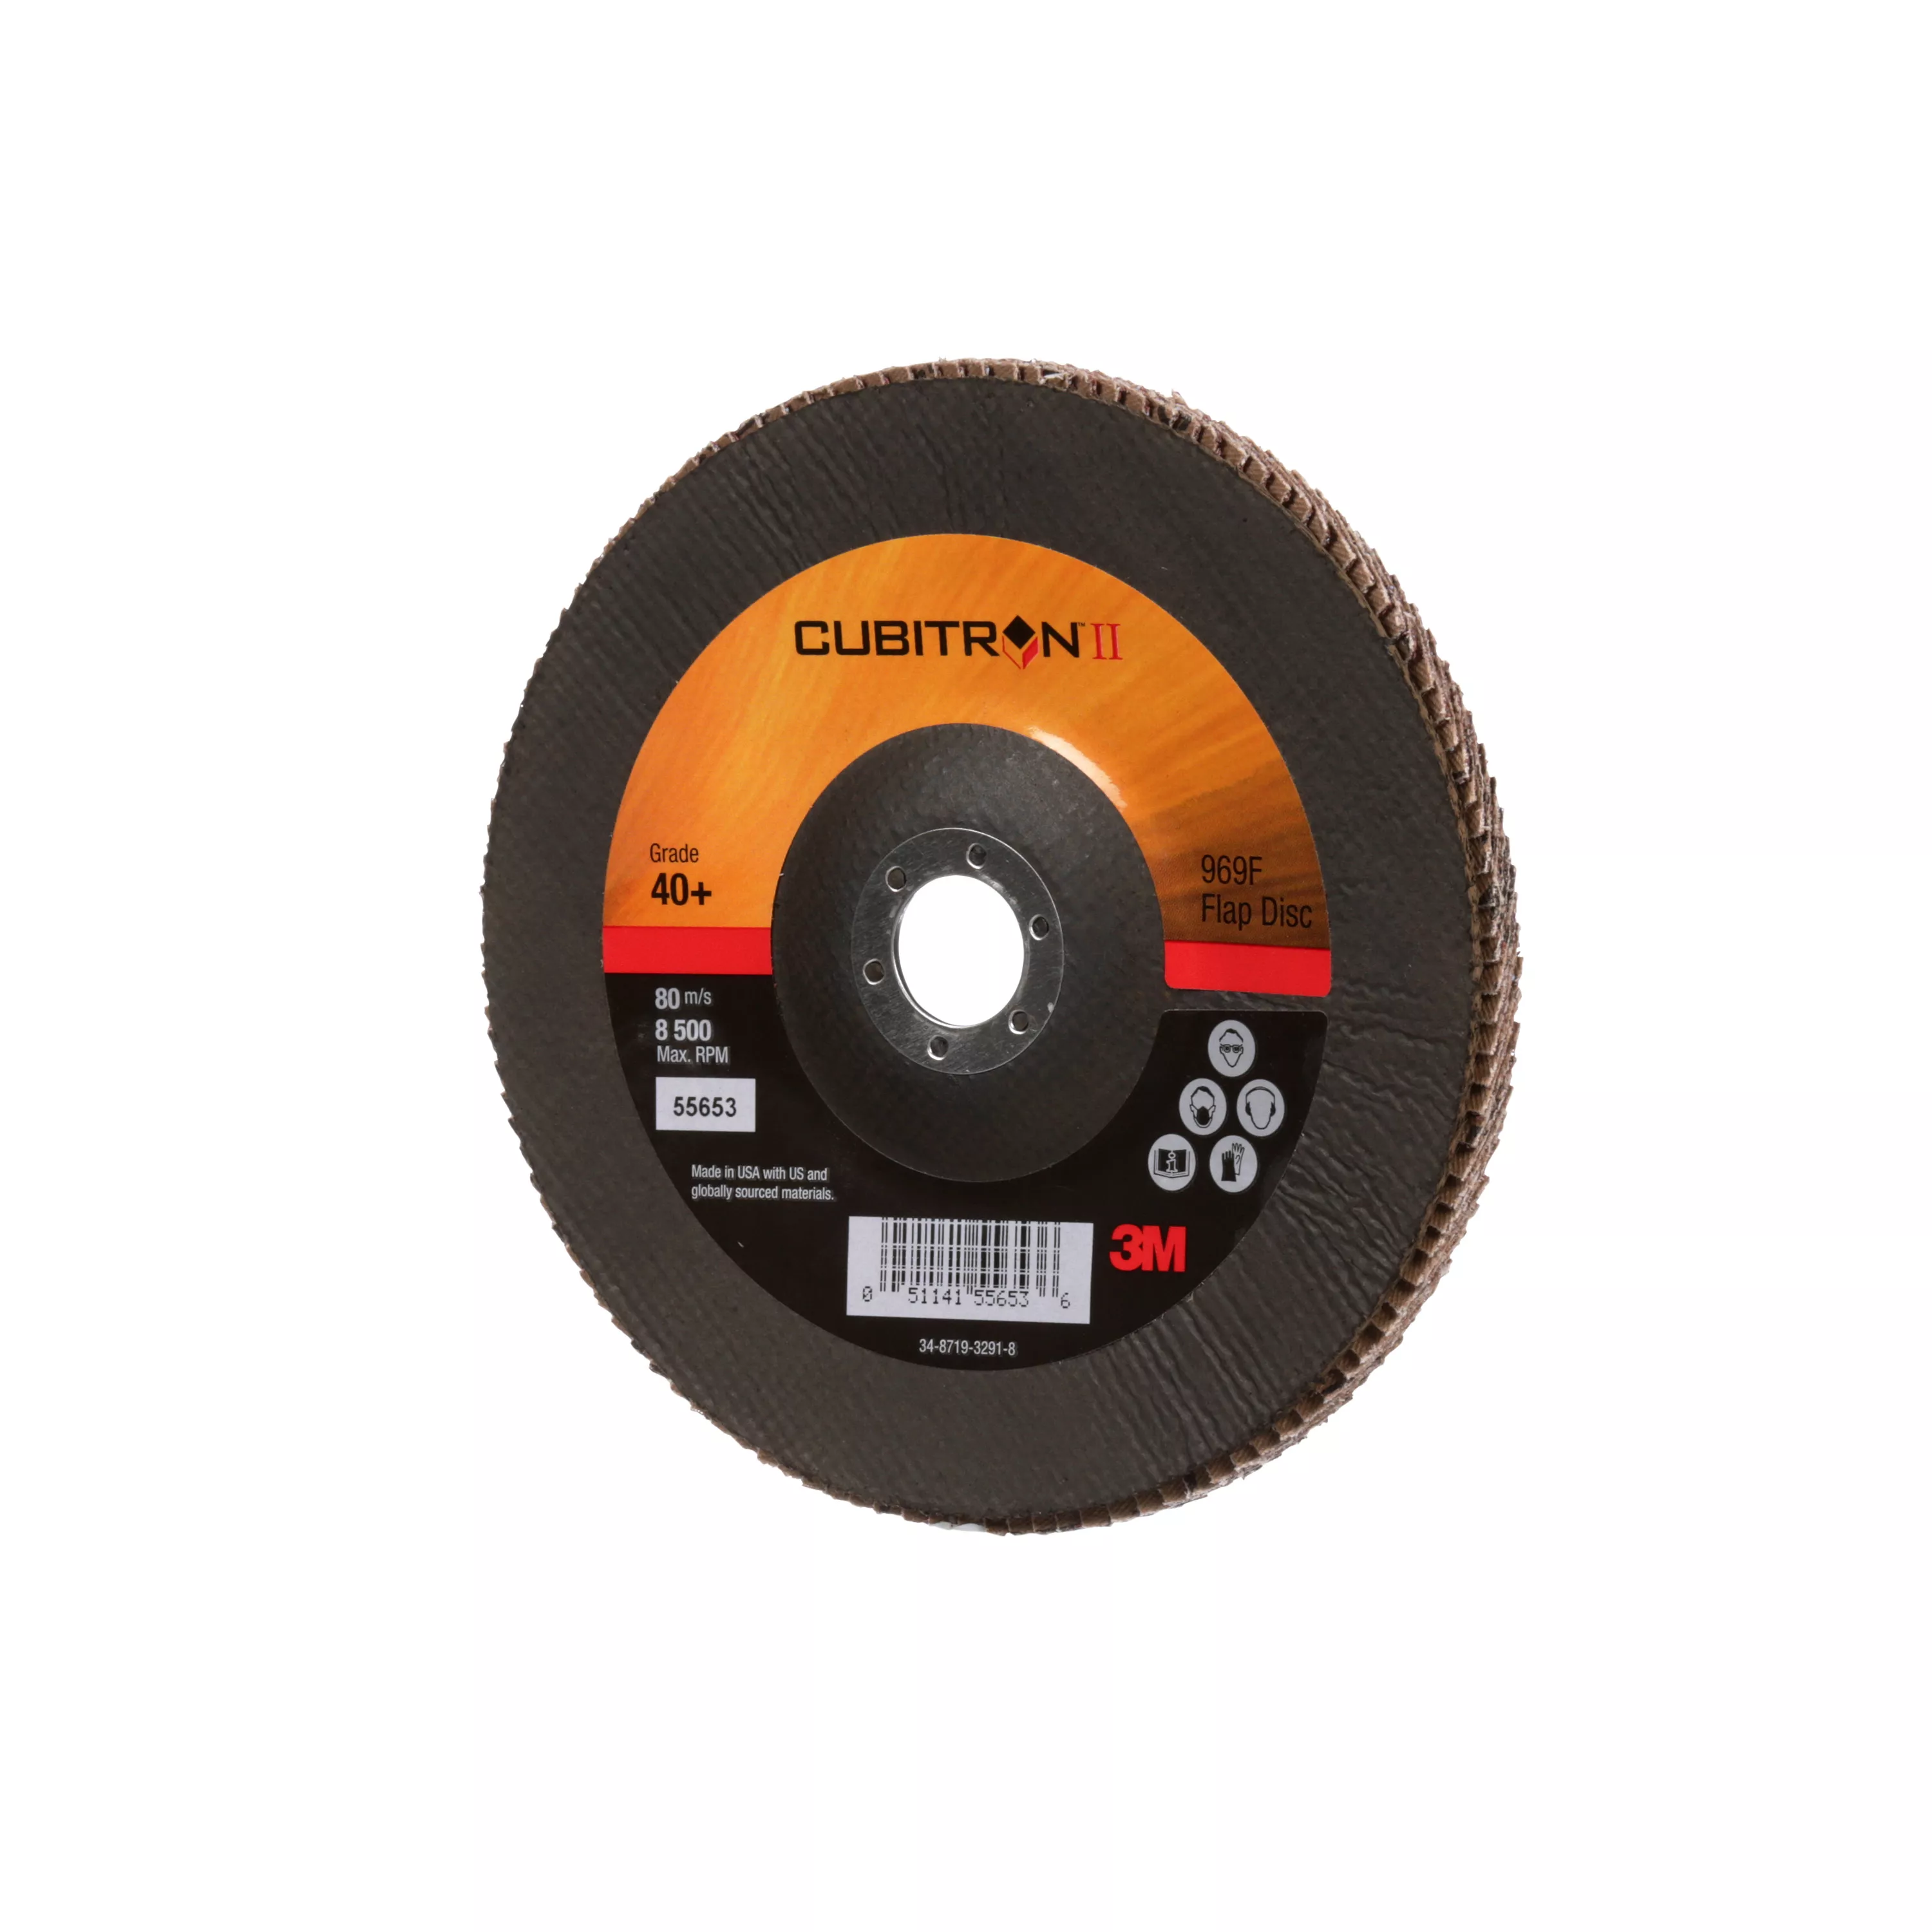 SKU 7100052279 | 3M™ Cubitron™ II Flap Disc 967A